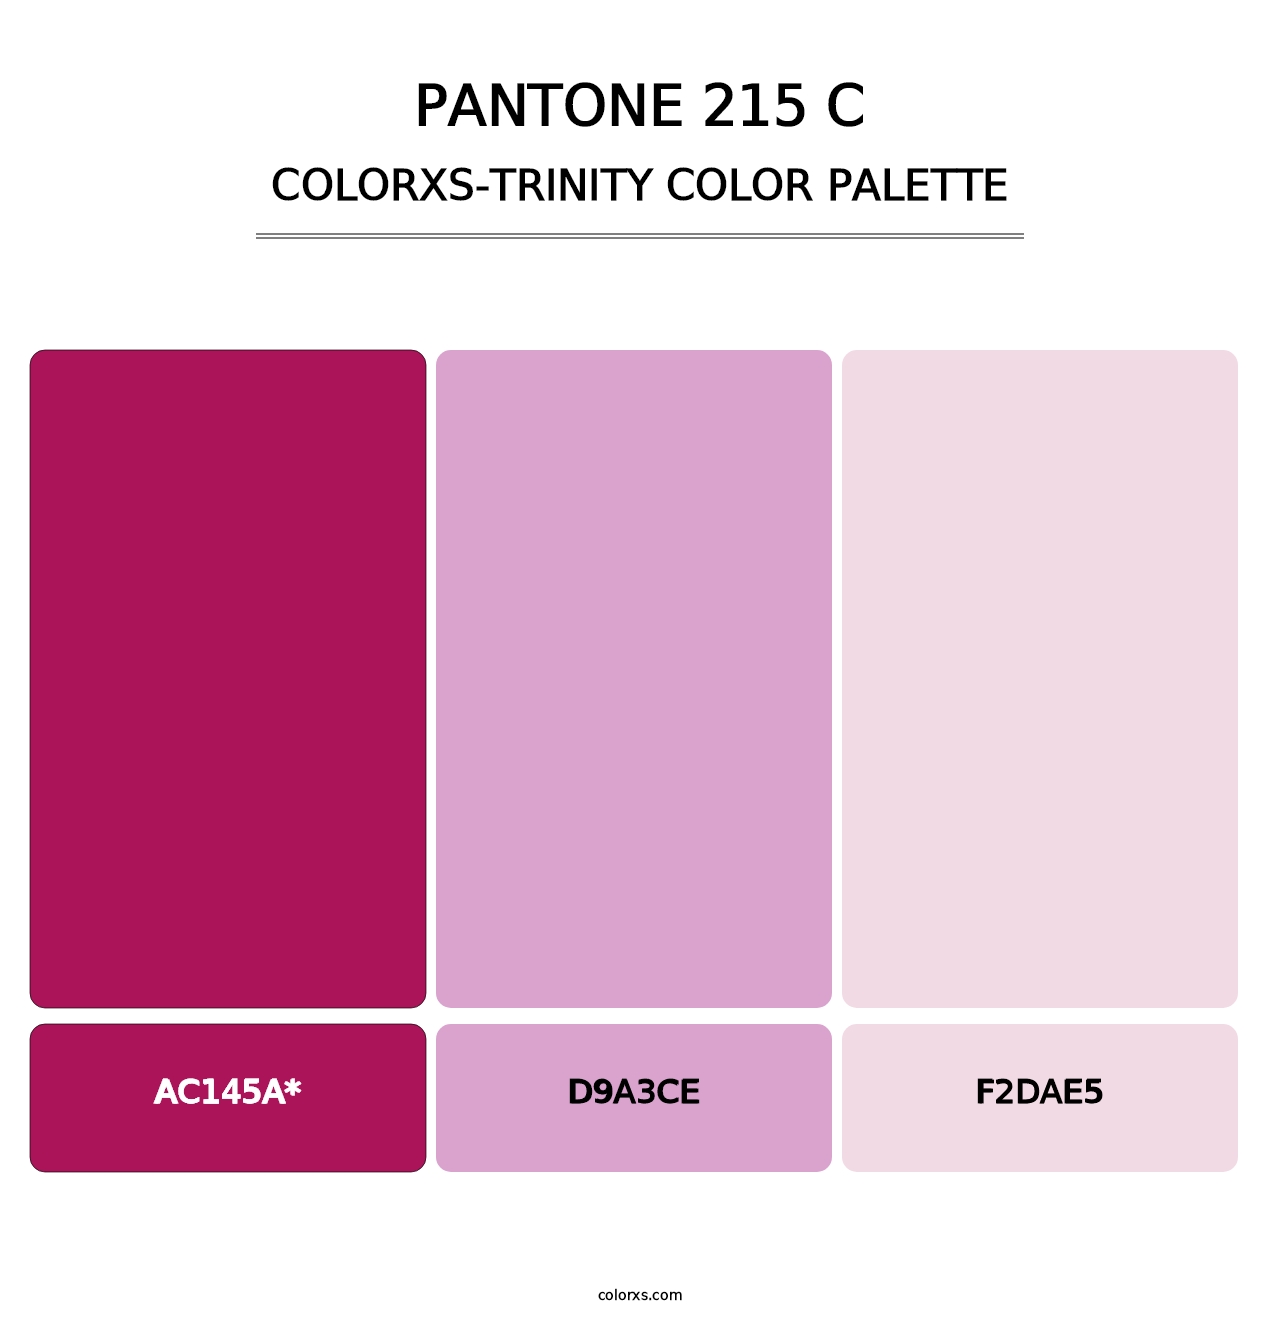 PANTONE 215 C - Colorxs Trinity Palette